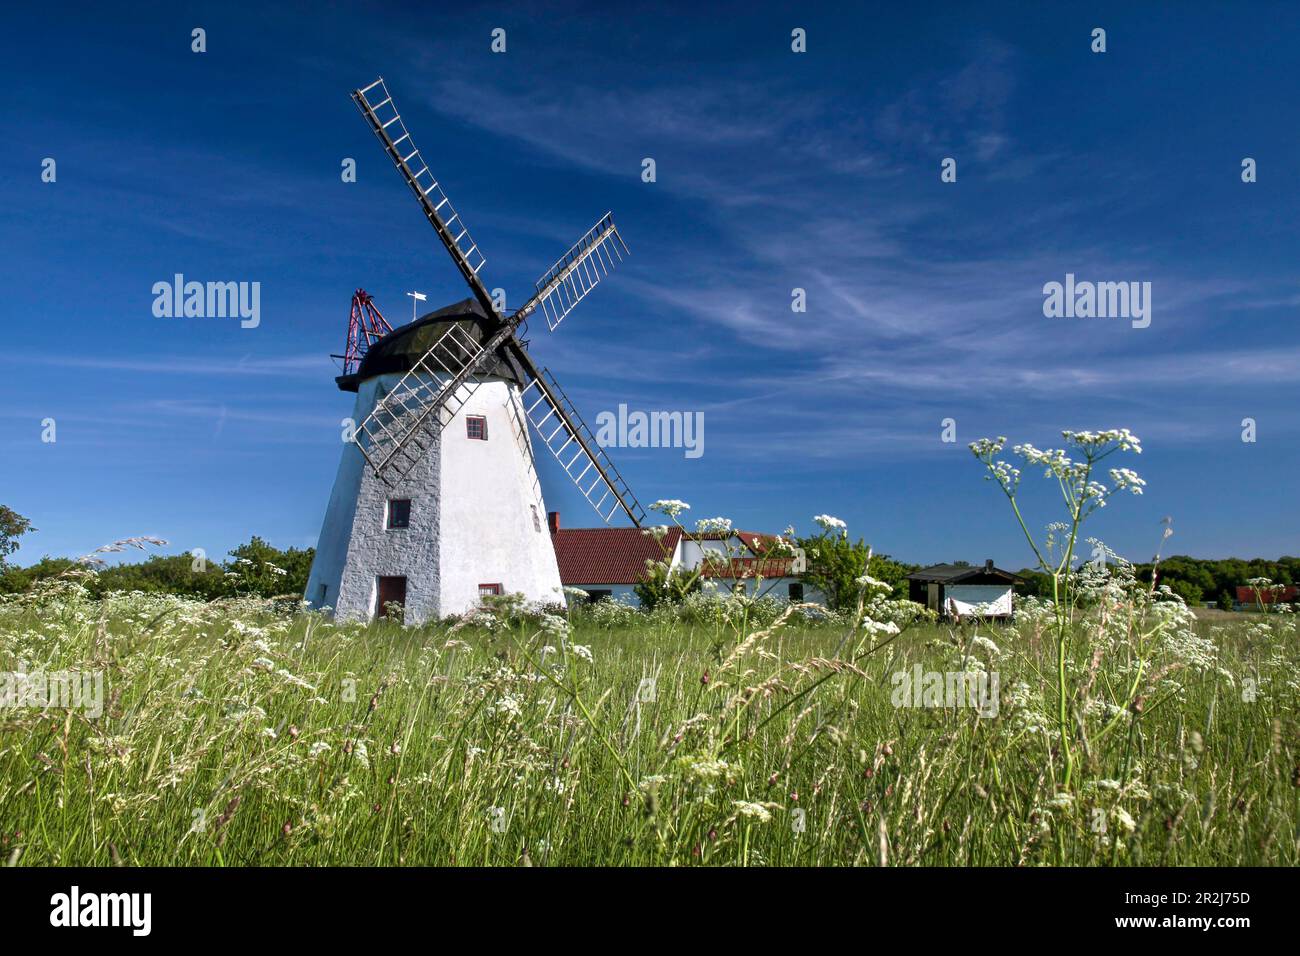 Windmill Myreagre Mølle in Aakirkeby on Bornholm, Denmark Stock Photo